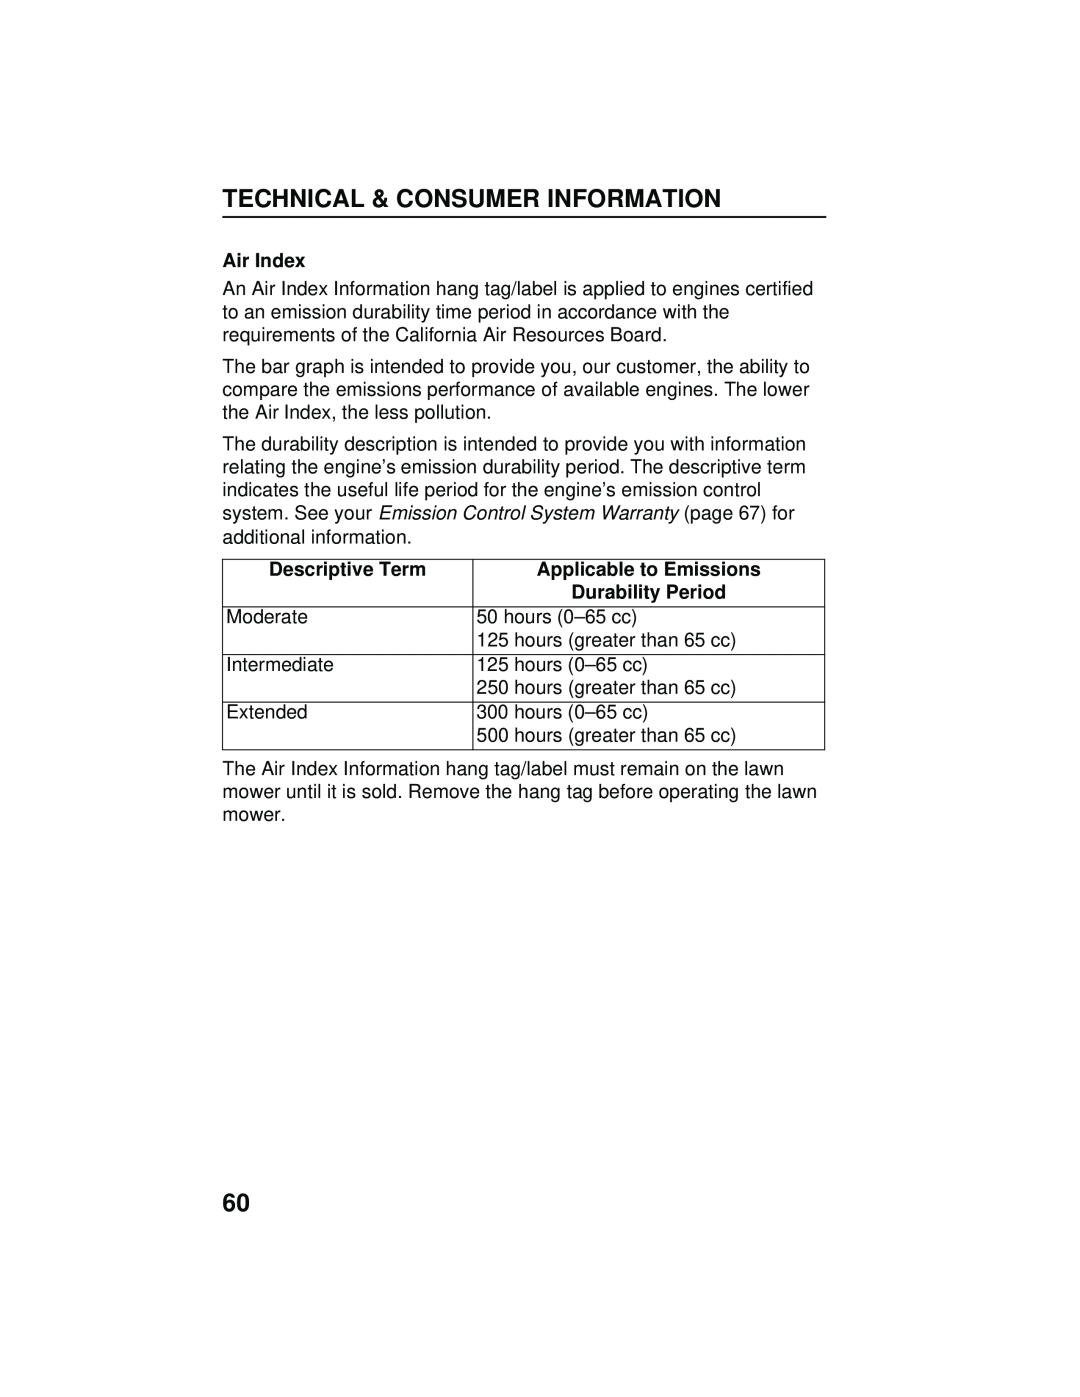 Honda Power Equipment HRB216TXA owner manual Air Index, Descriptive Term, Applicable to Emissions, Durability Period 